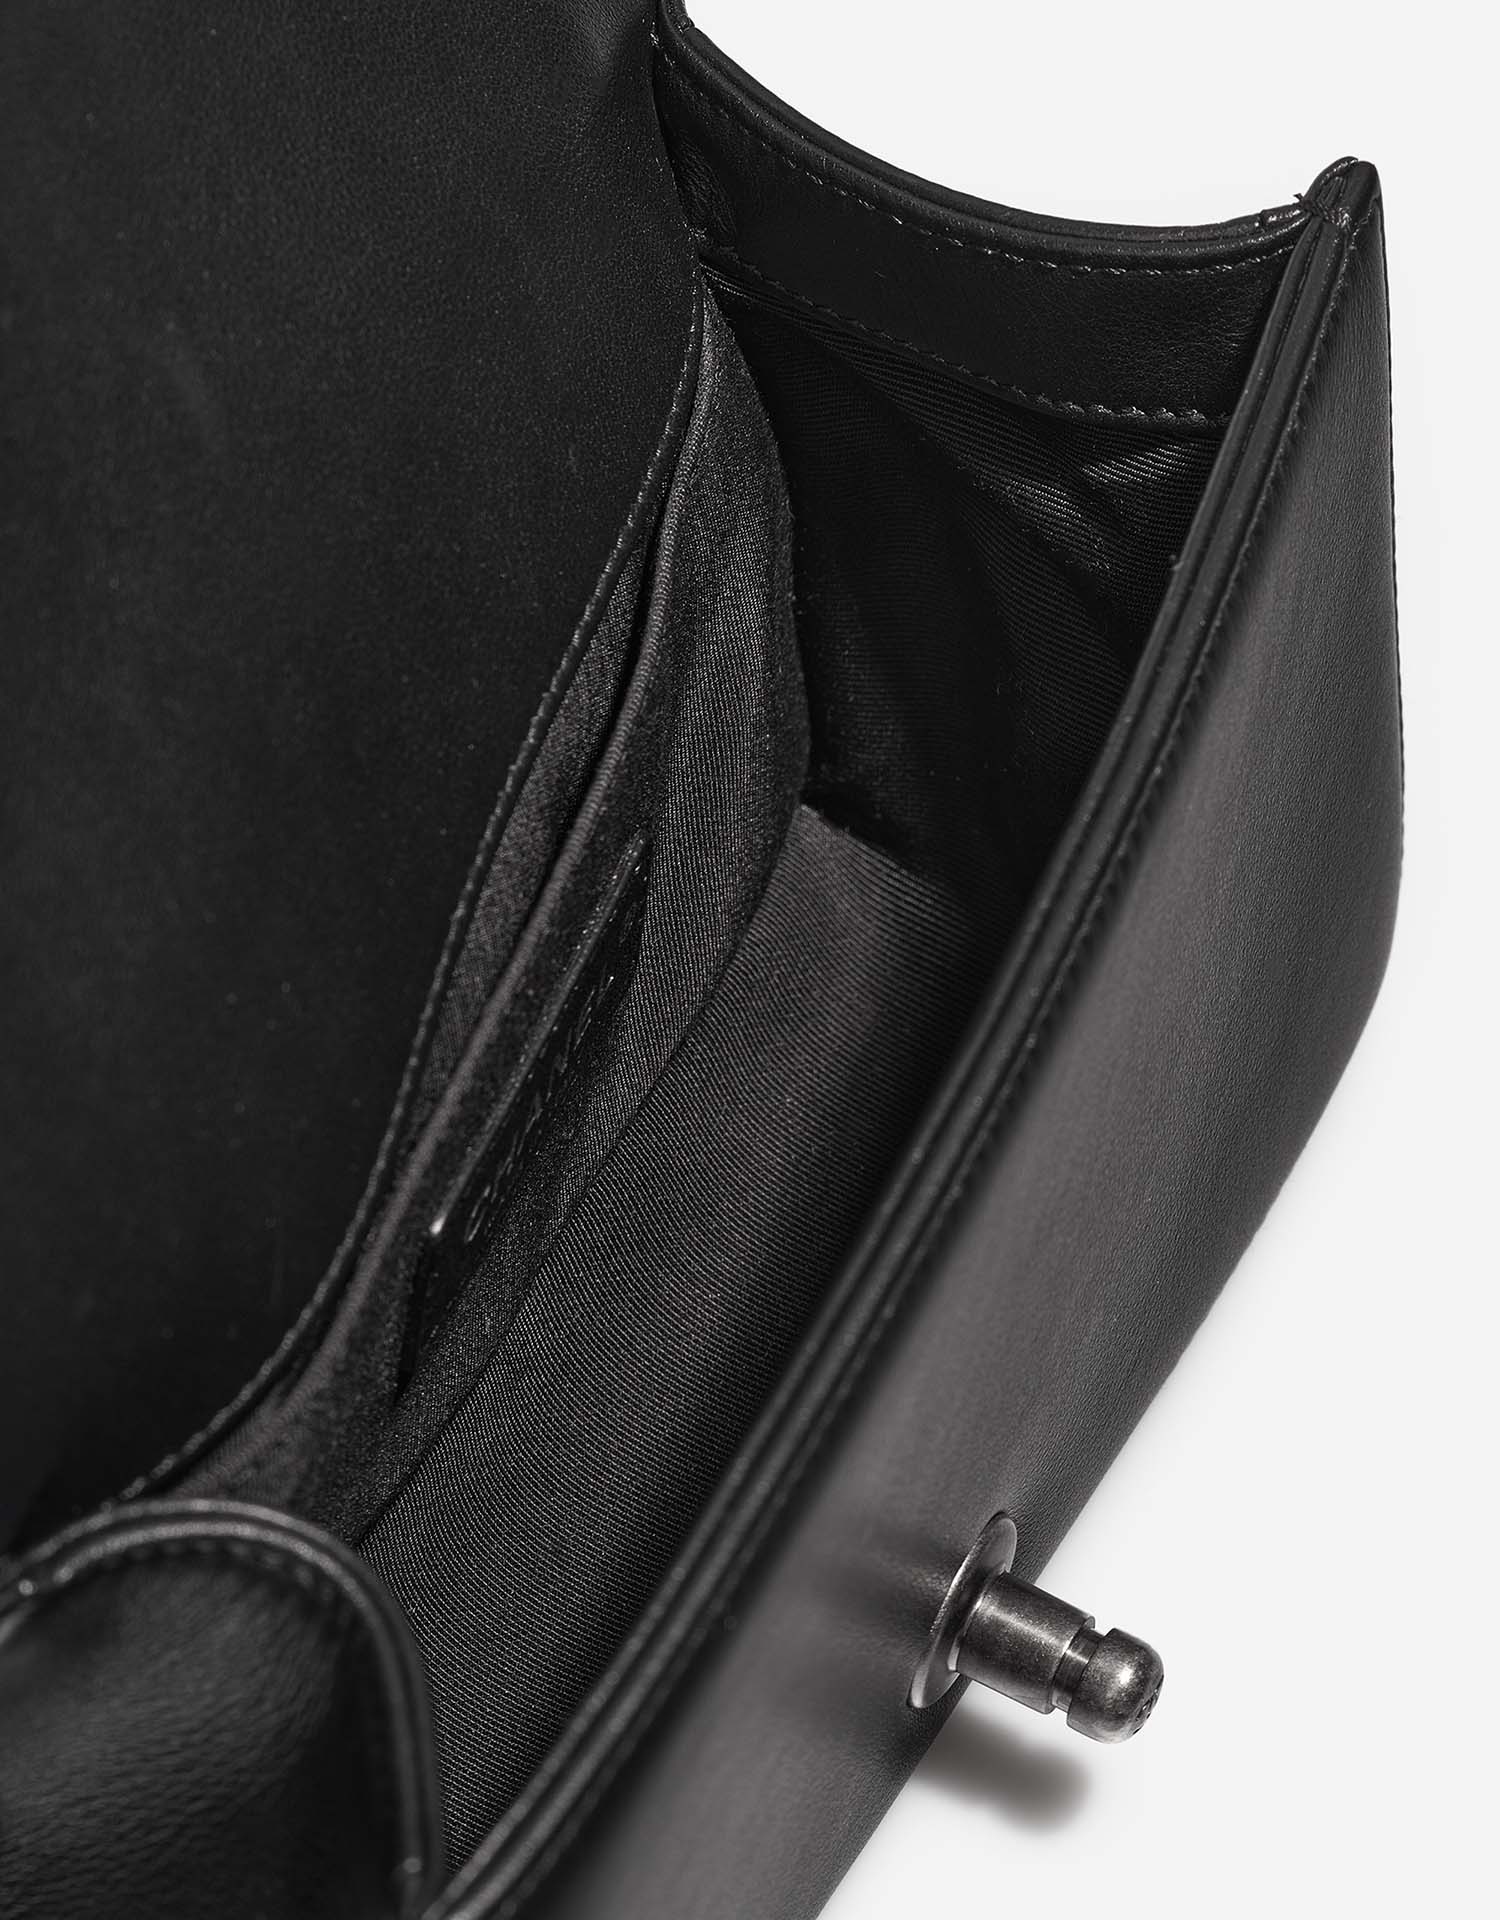 Chanel Boy Small Black Inside  | Sell your designer bag on Saclab.com